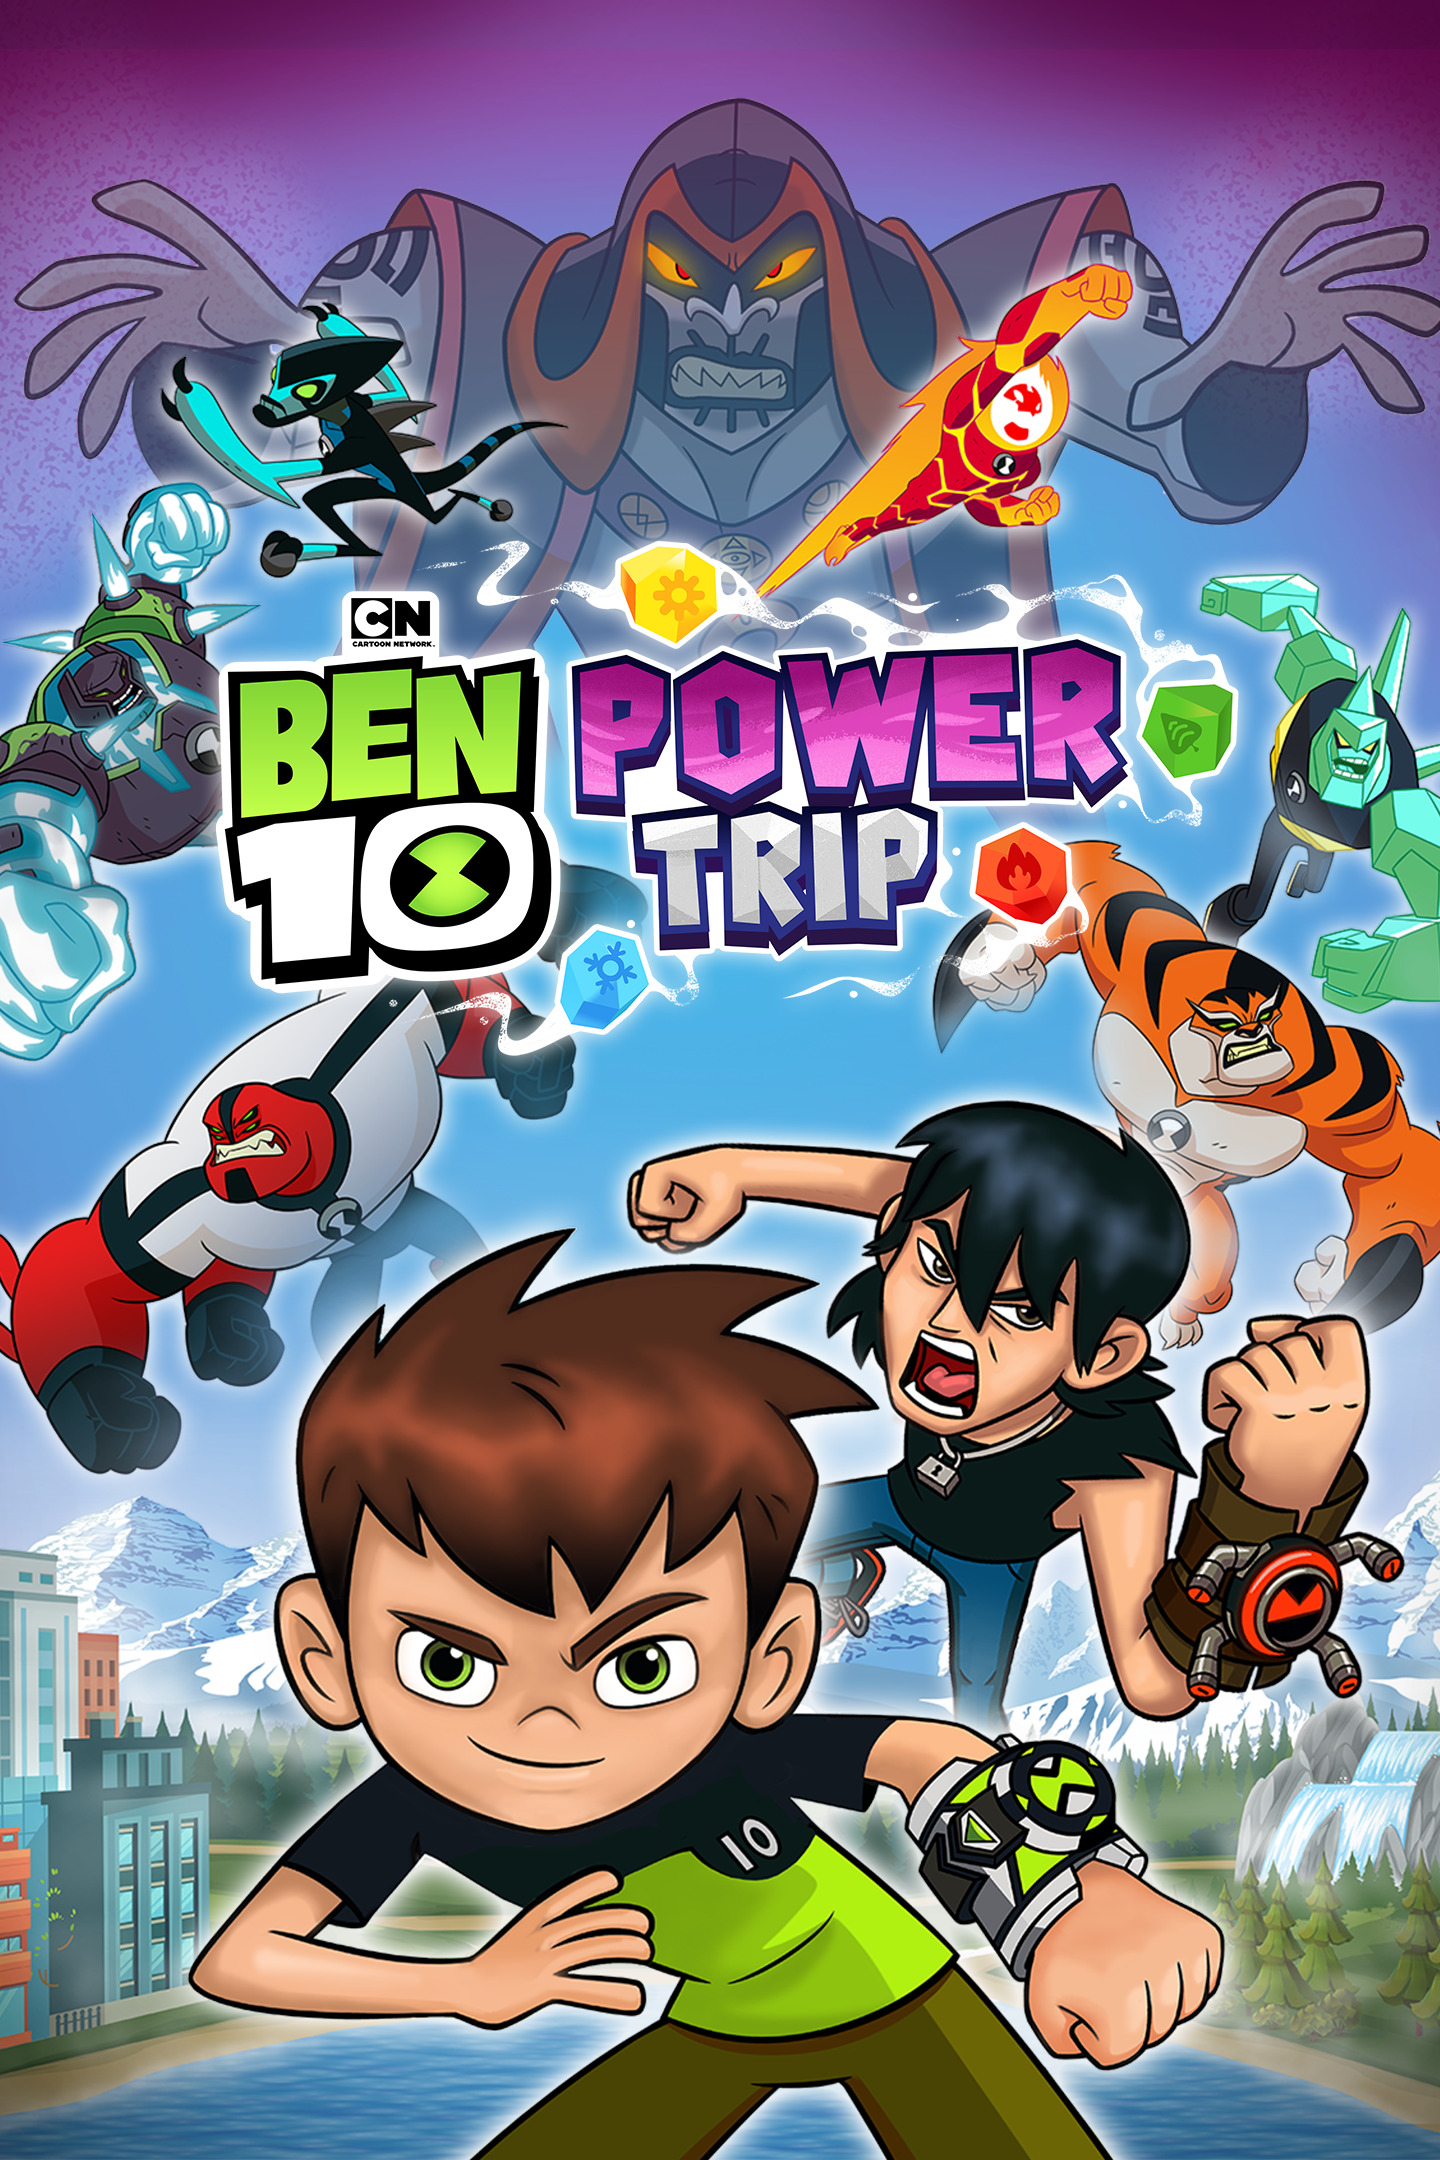 ben 10 power trip game download zip file